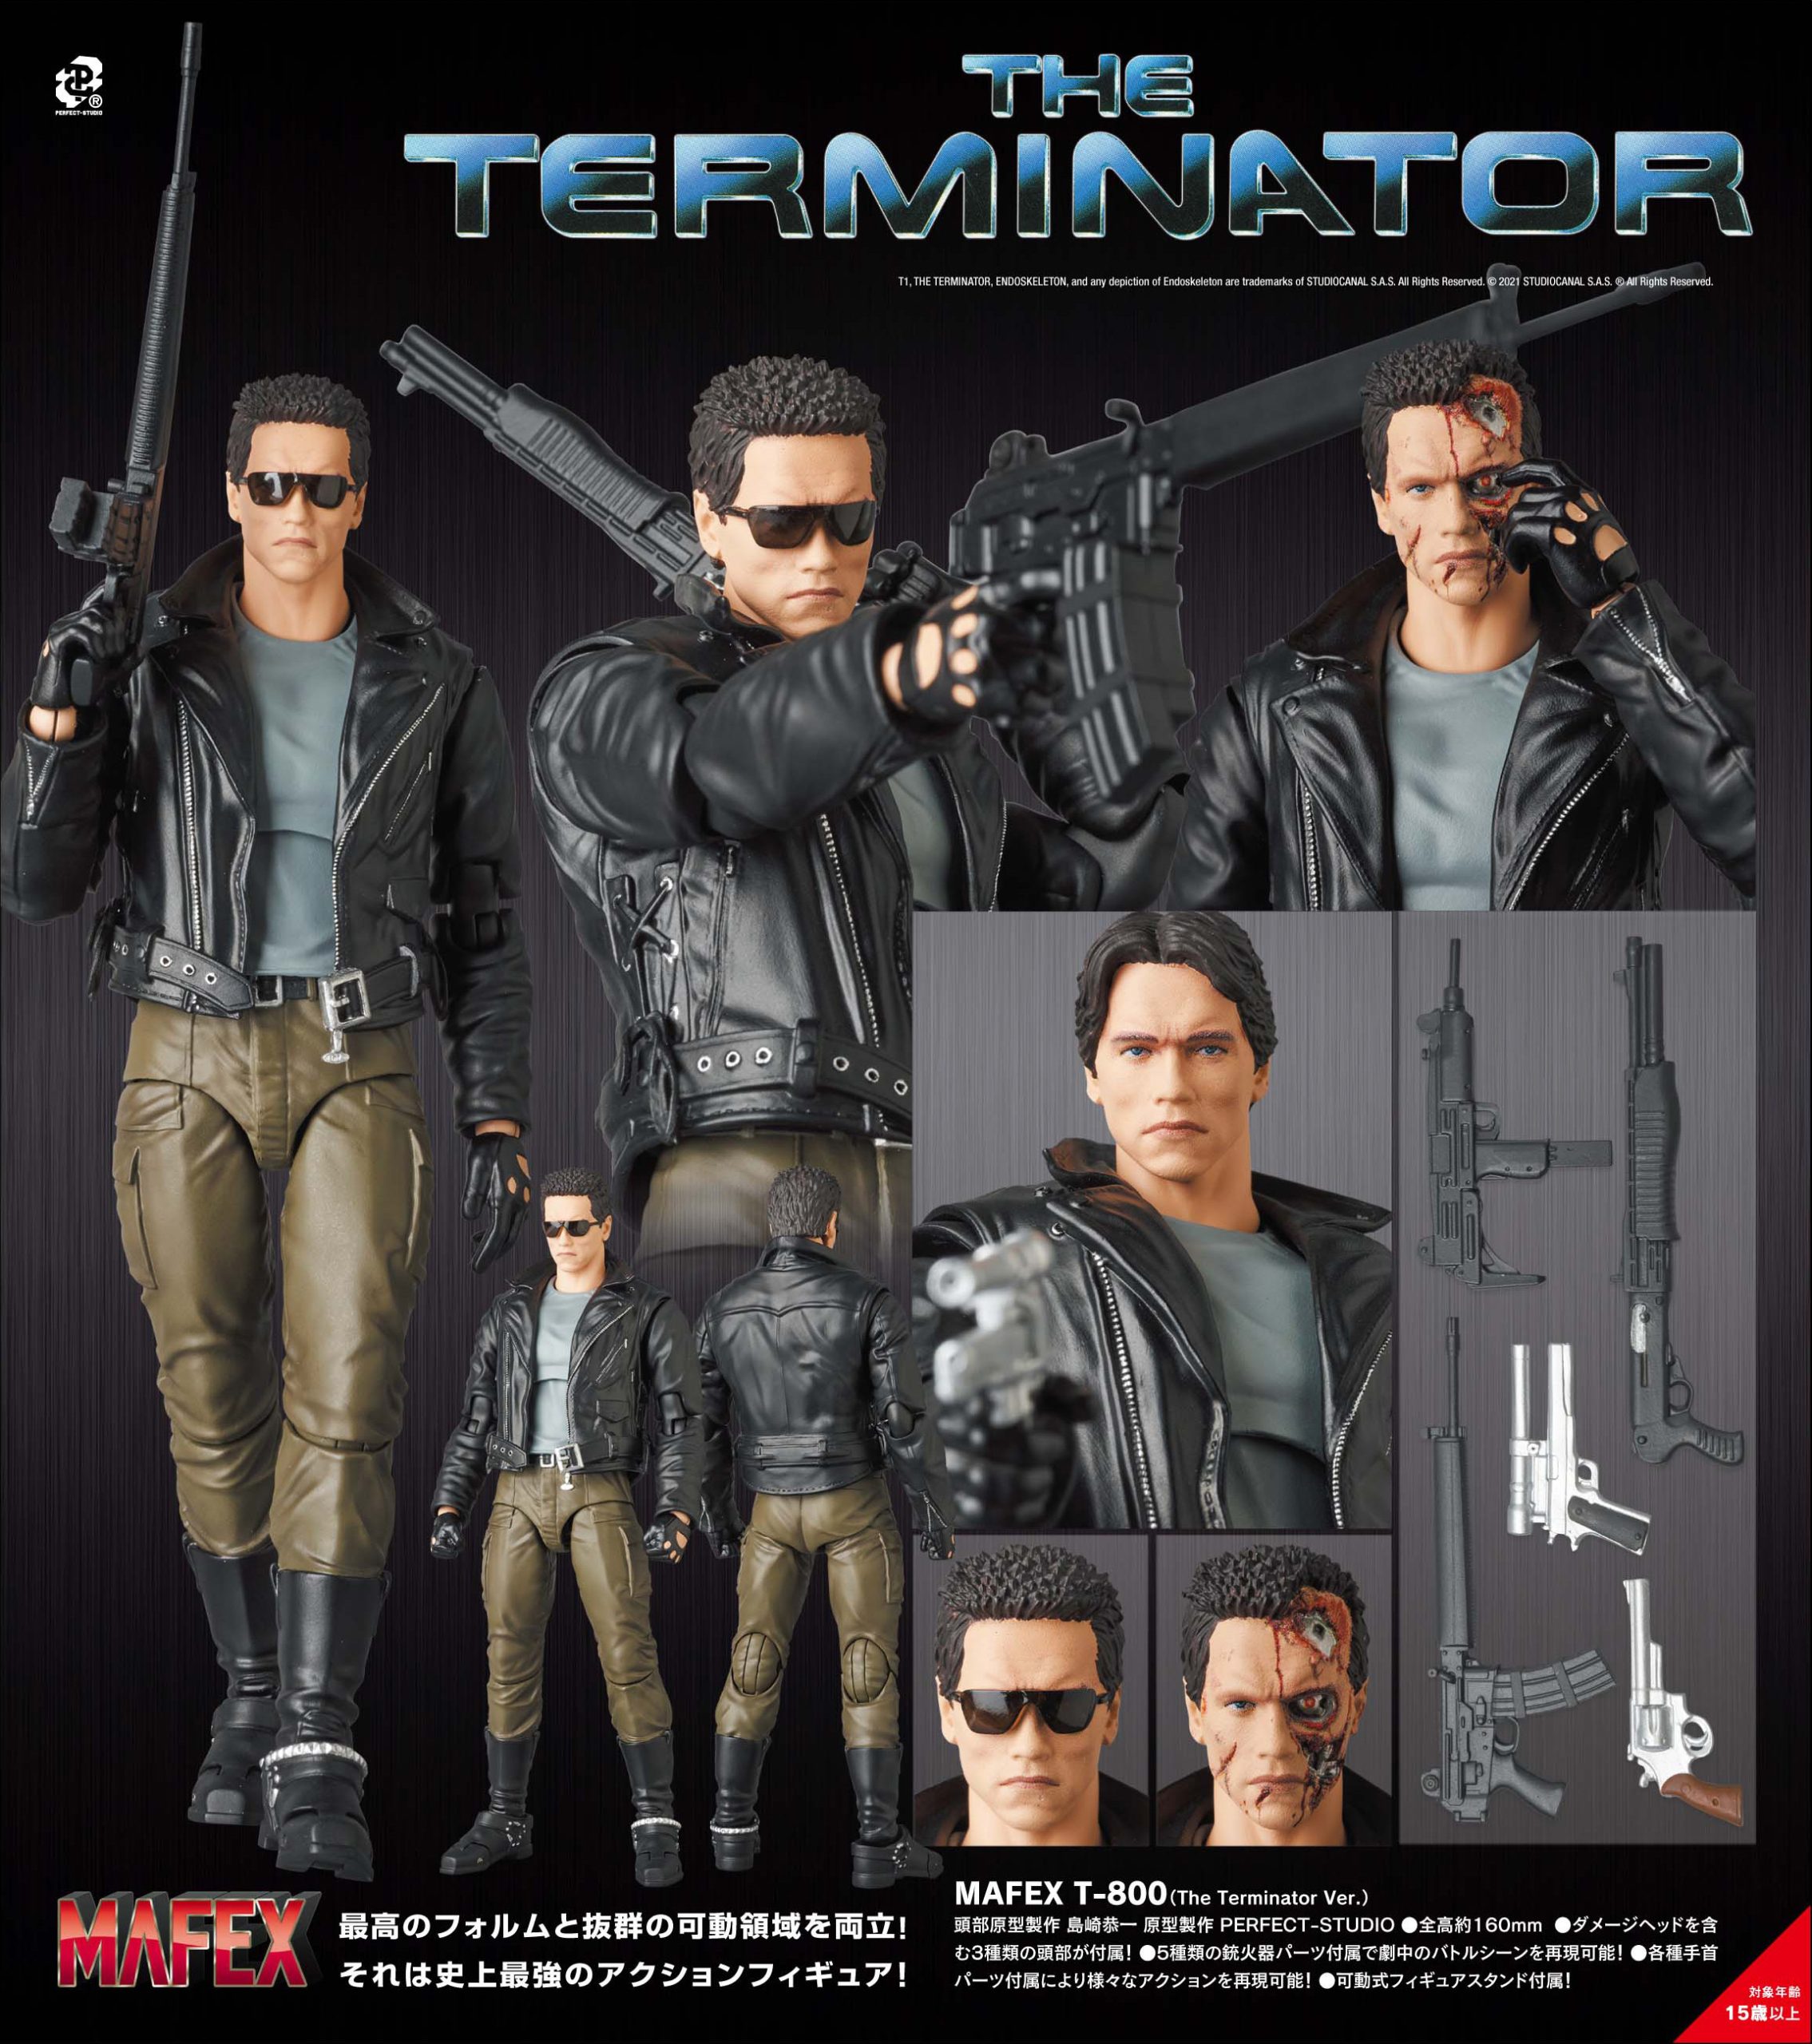 Medicom Toy MAFEX The Terminator T-800 Action Figure